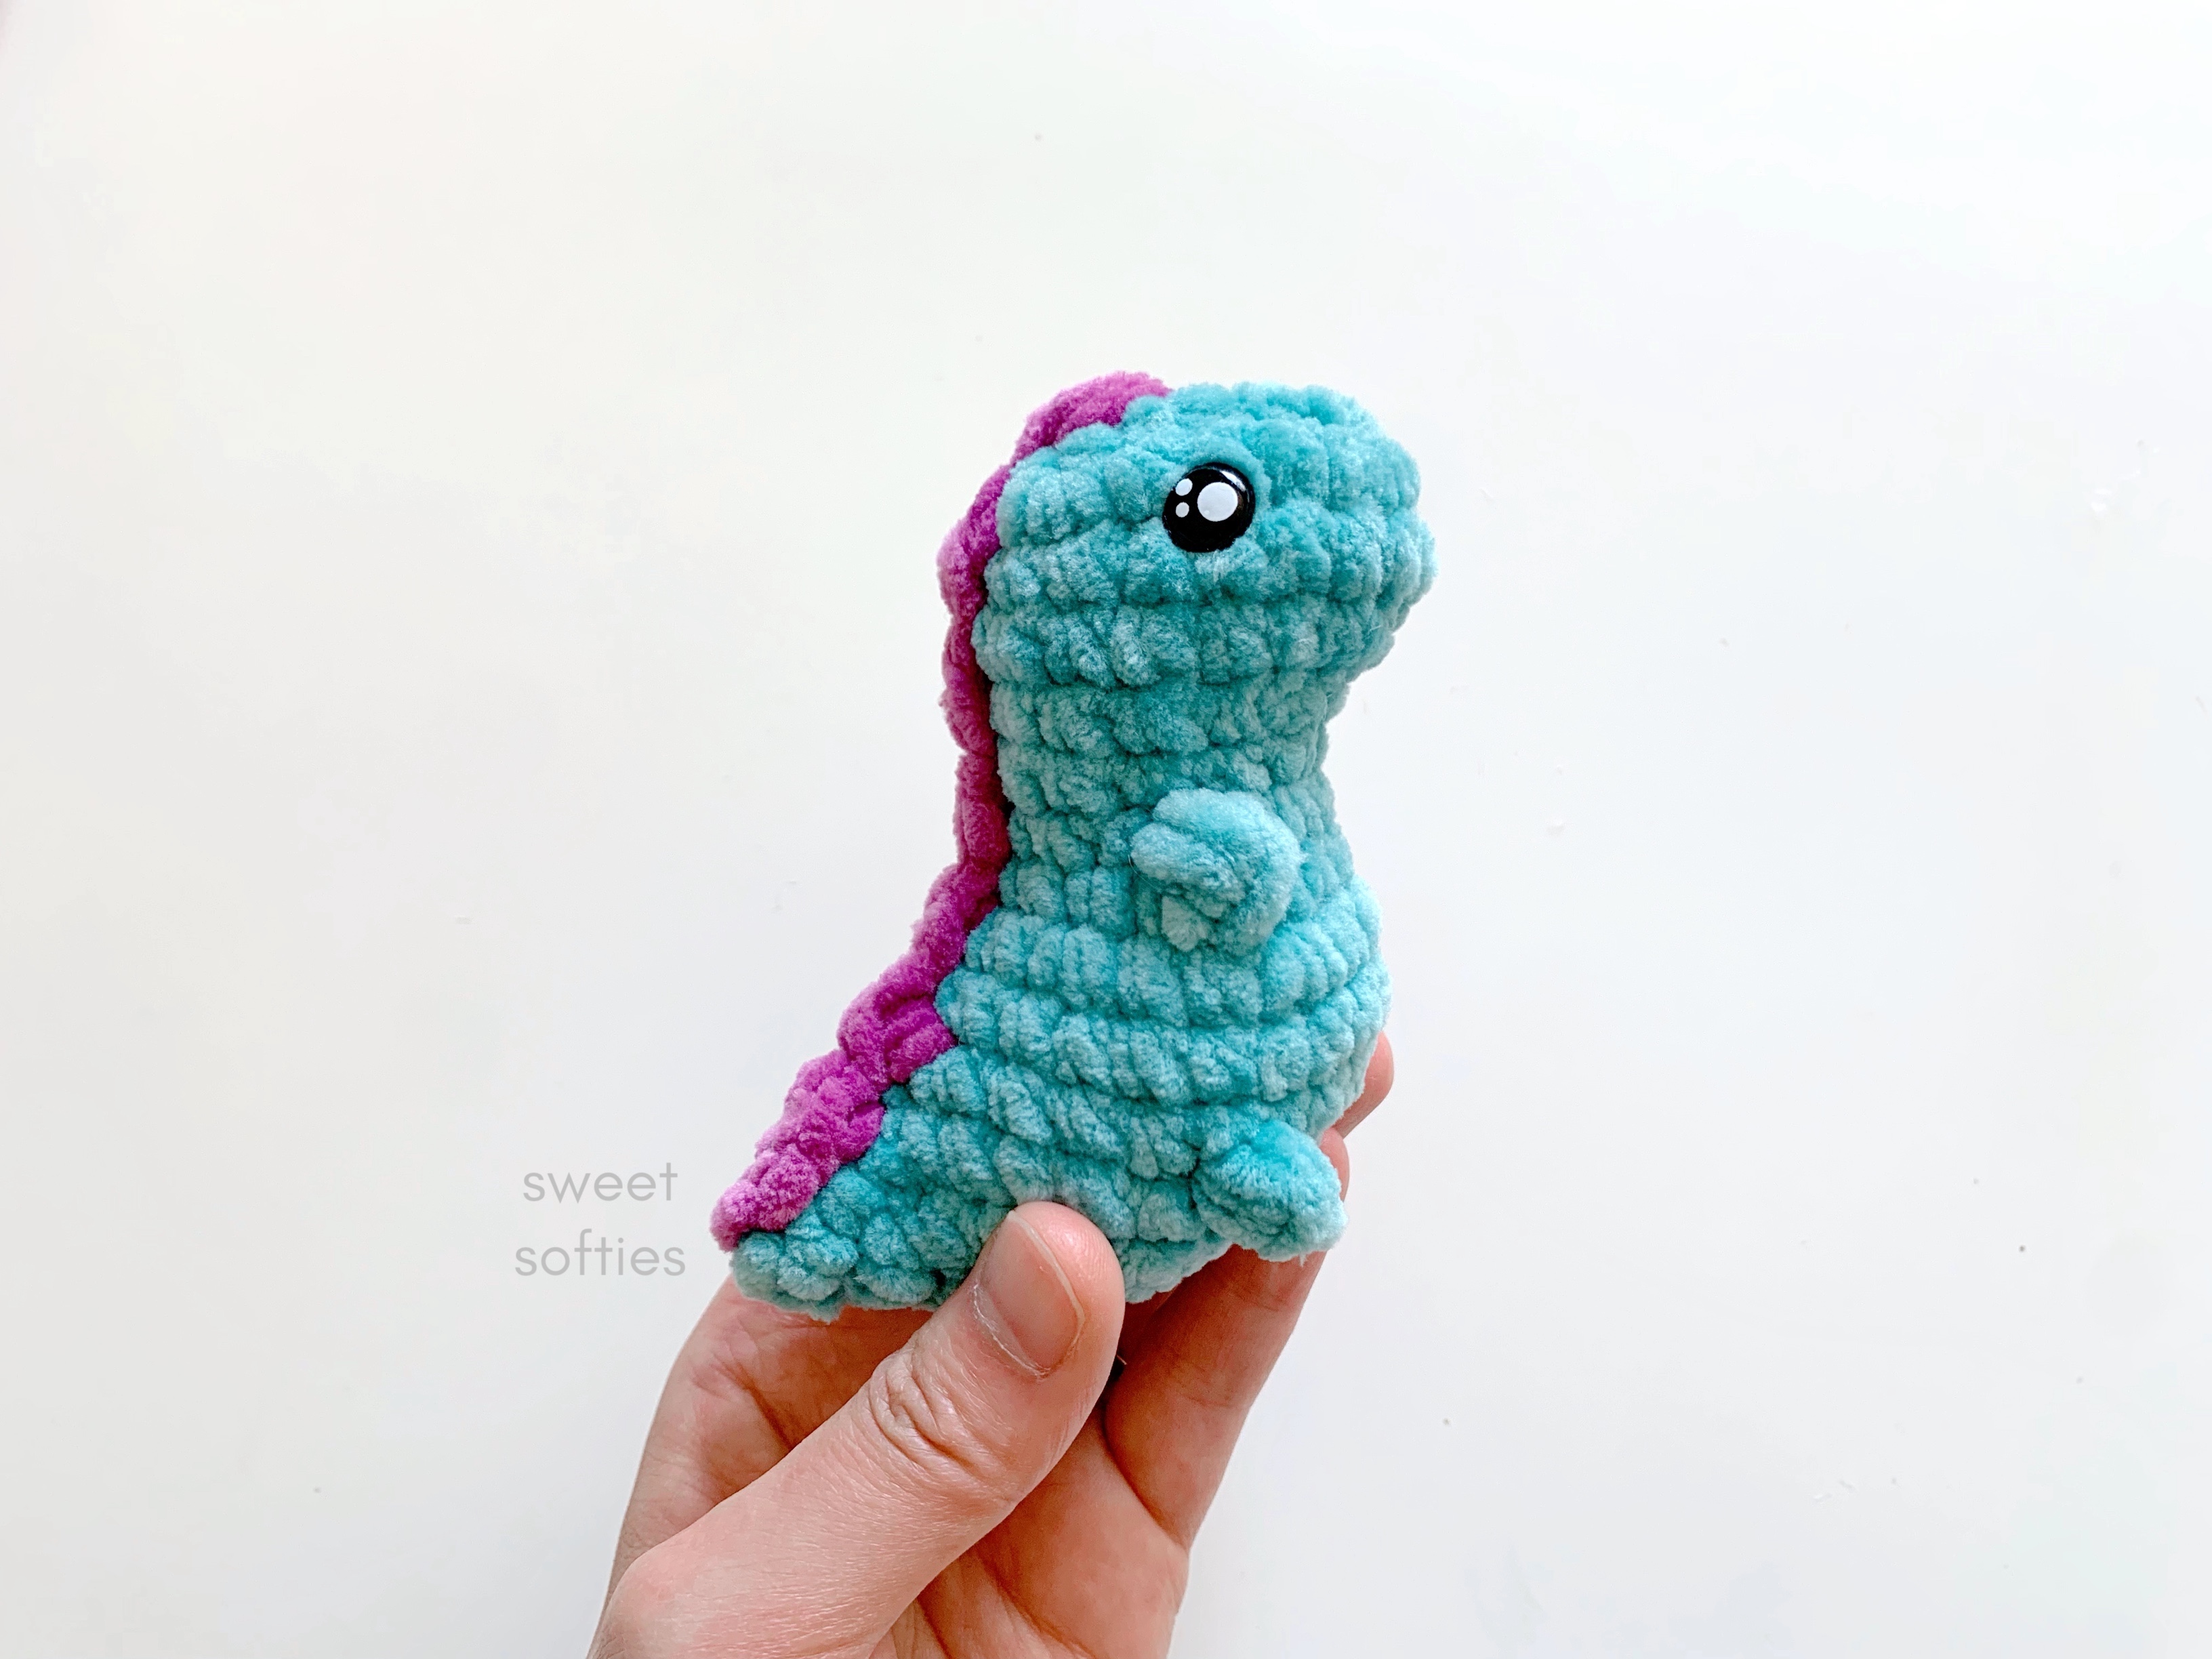 30 [Fun & Adorable!] Free Crochet Keychain Patterns